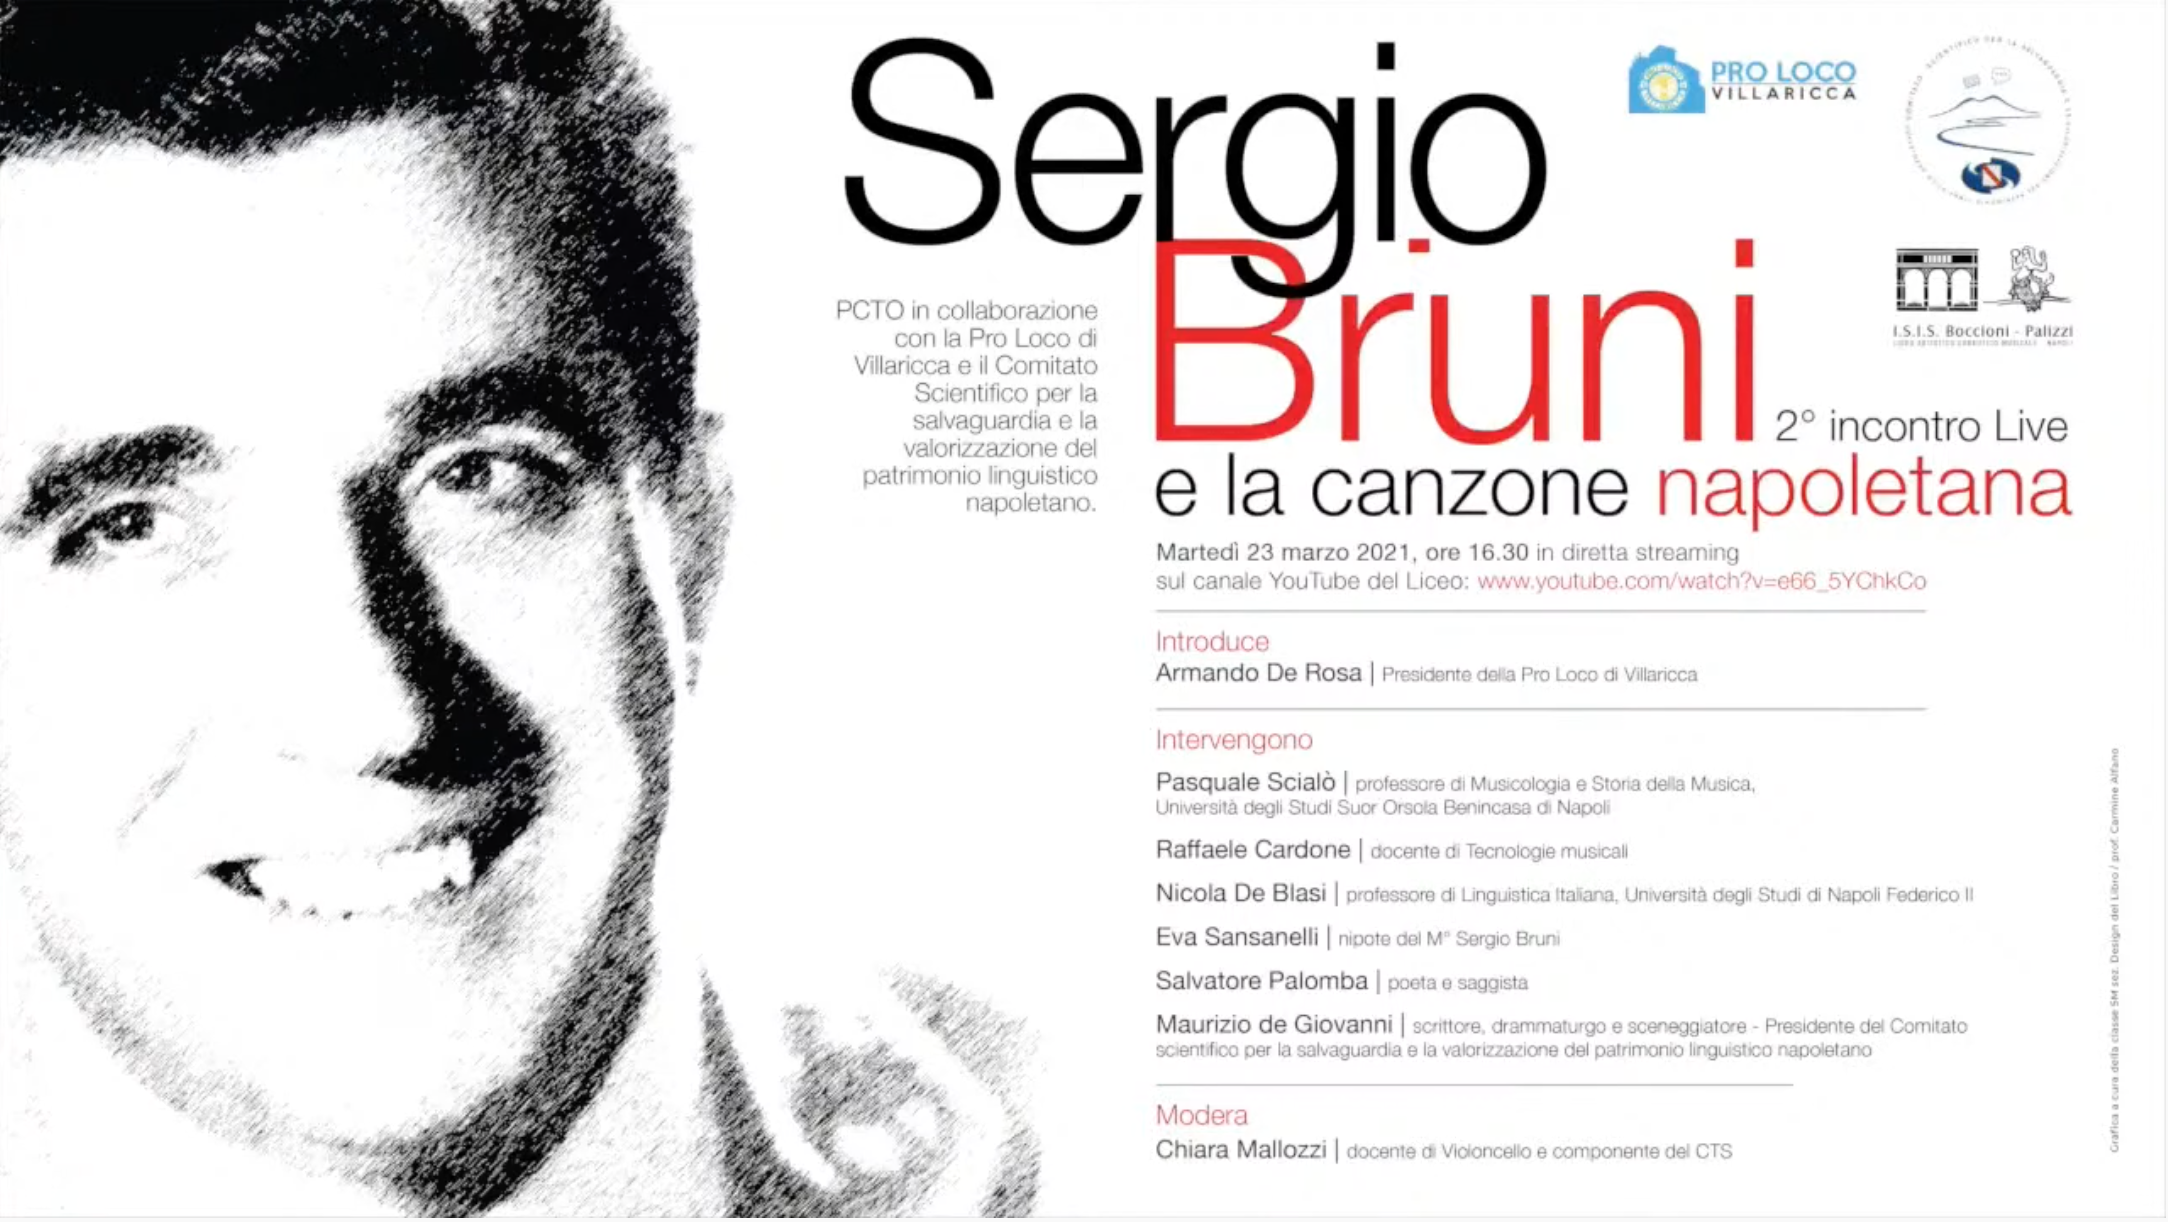 Sergio Bruni